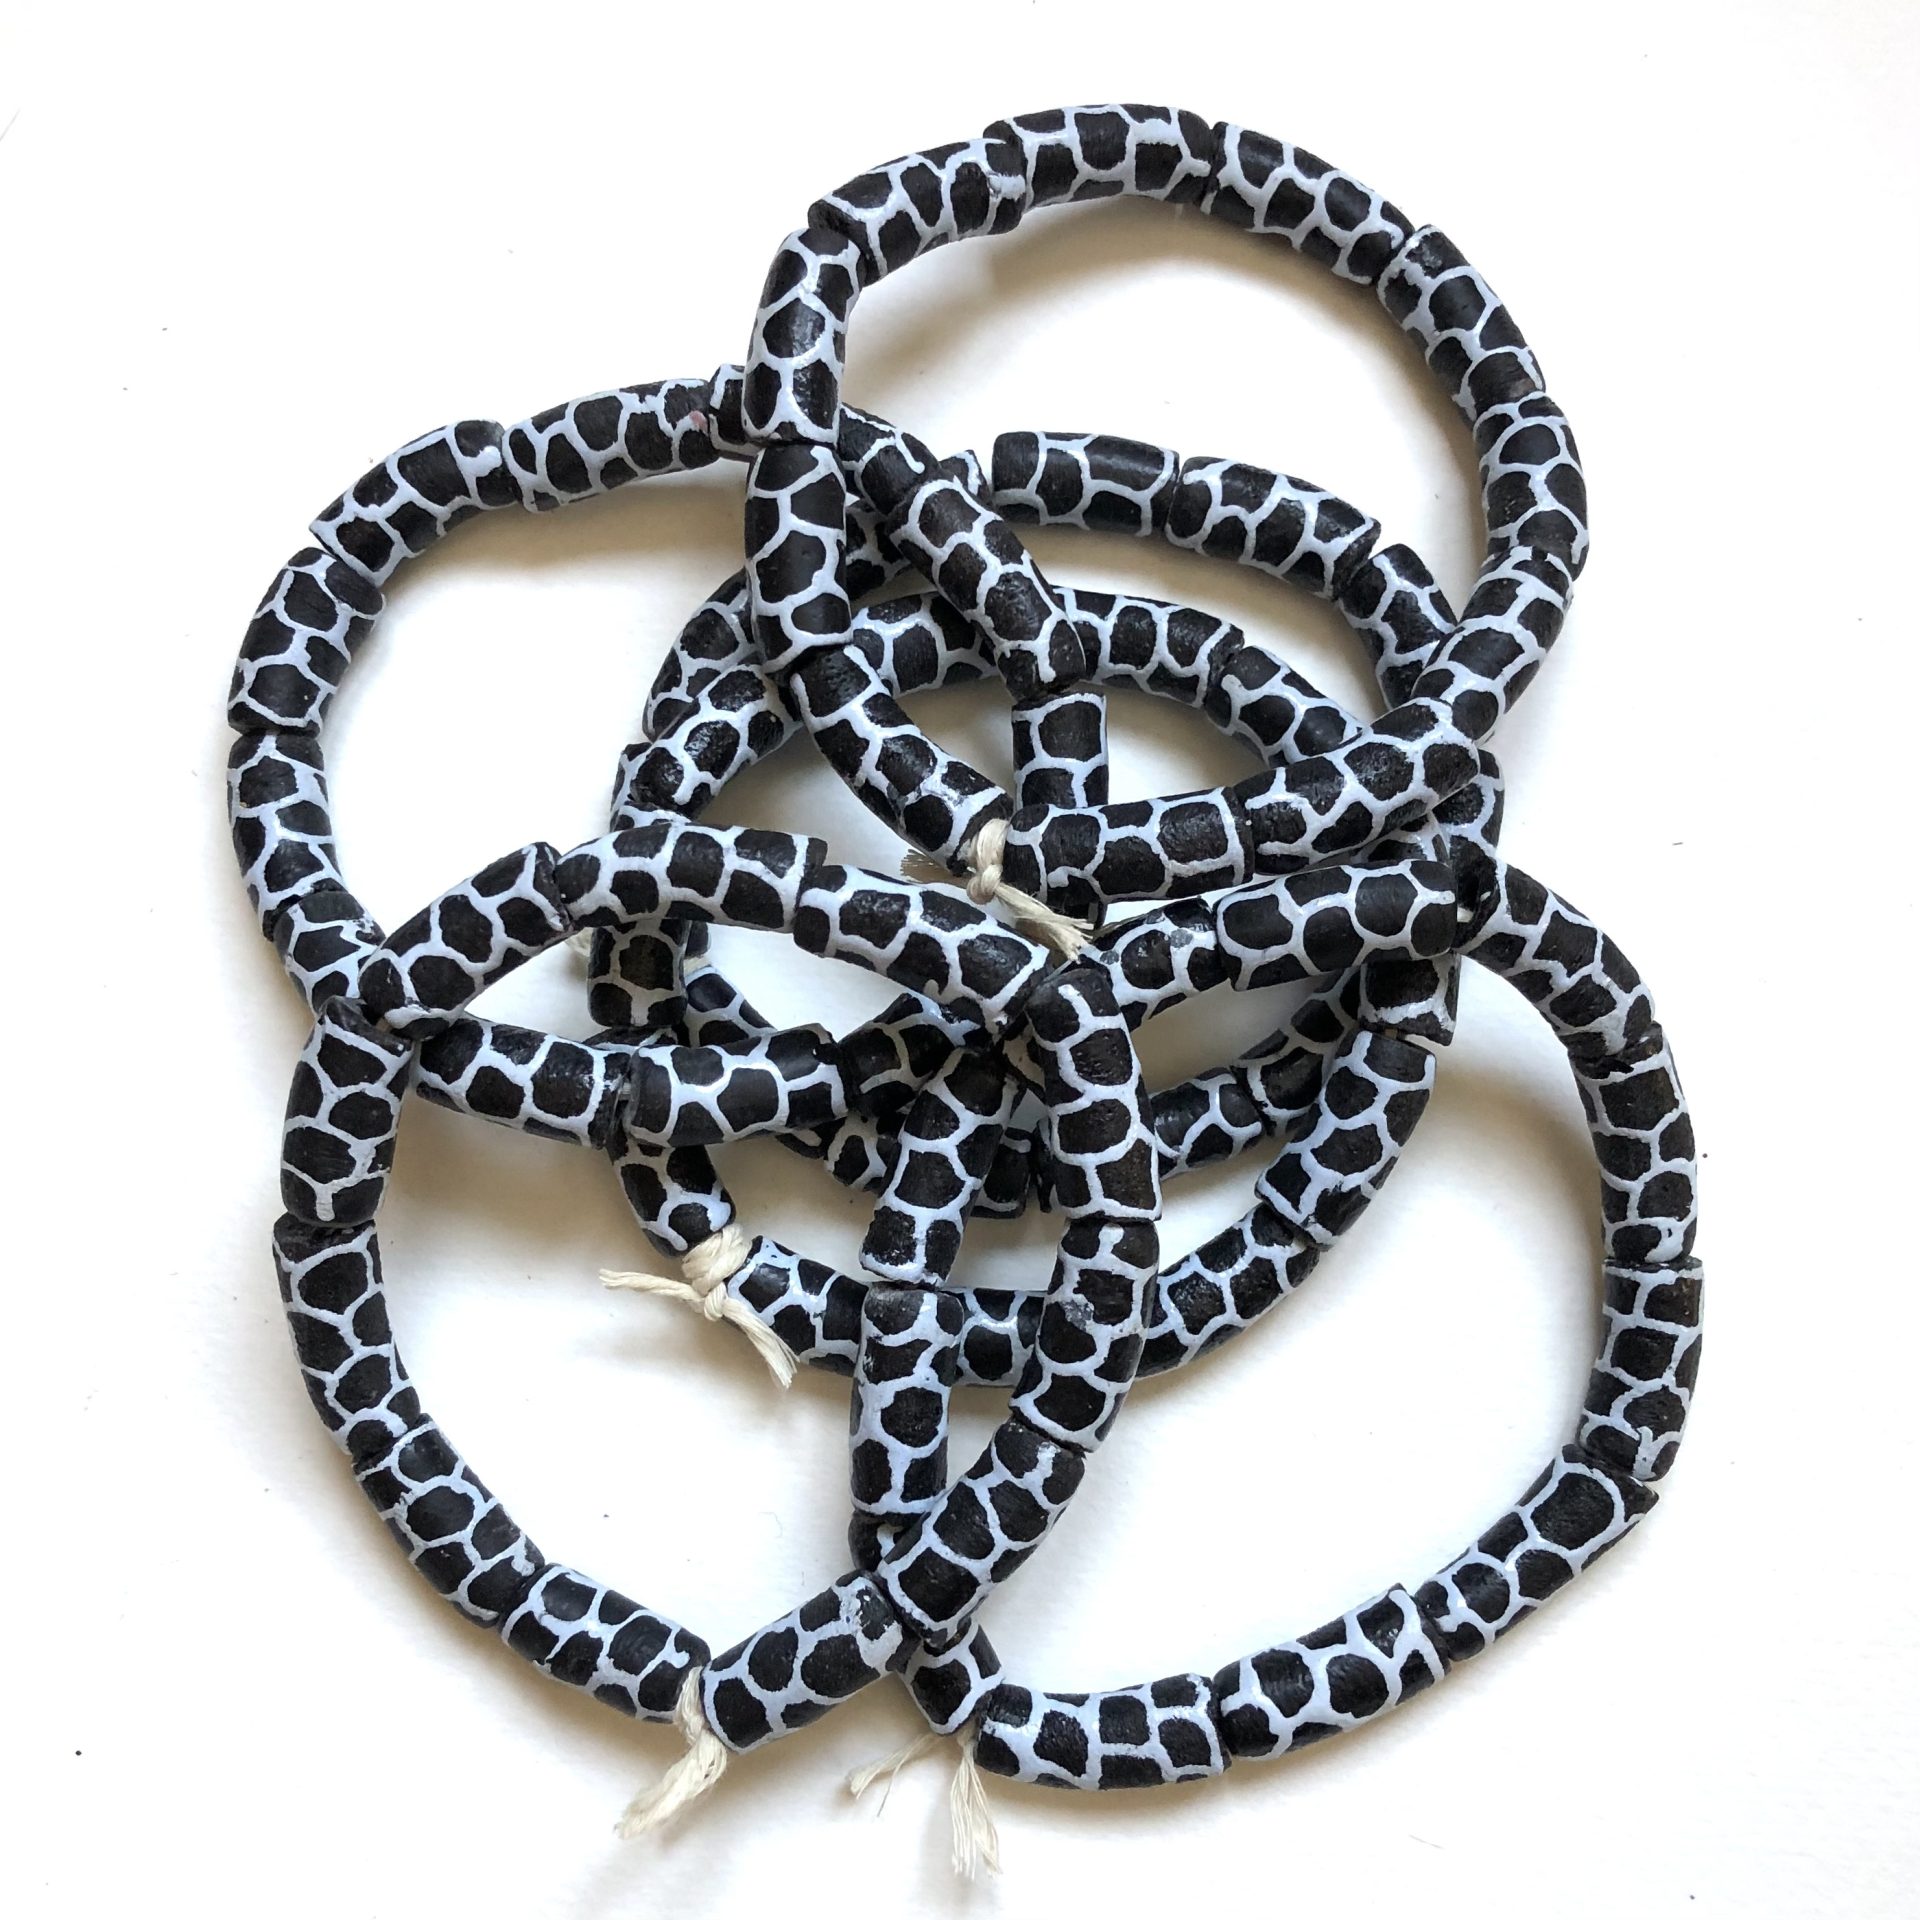 B+W Recycled Glass Beads